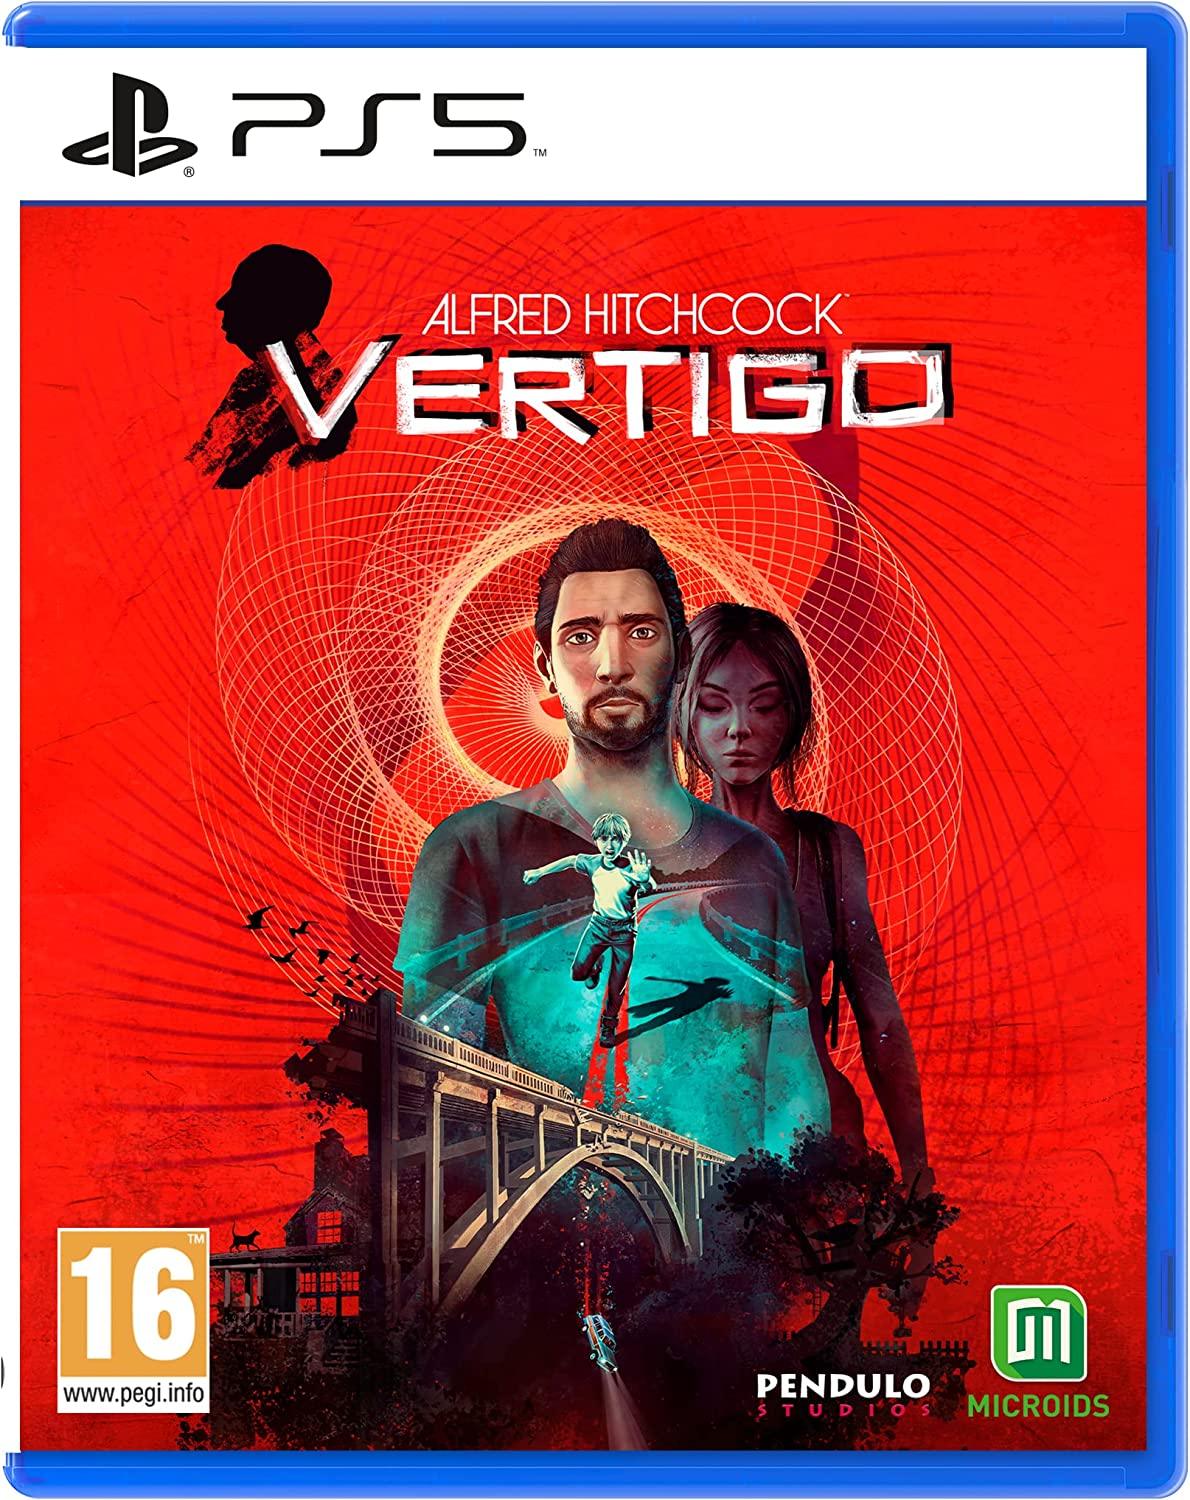 Alfred Hitchcock: Vertigo - Limited Edition (PS5) - GameStore.mt | Powered by Flutisat